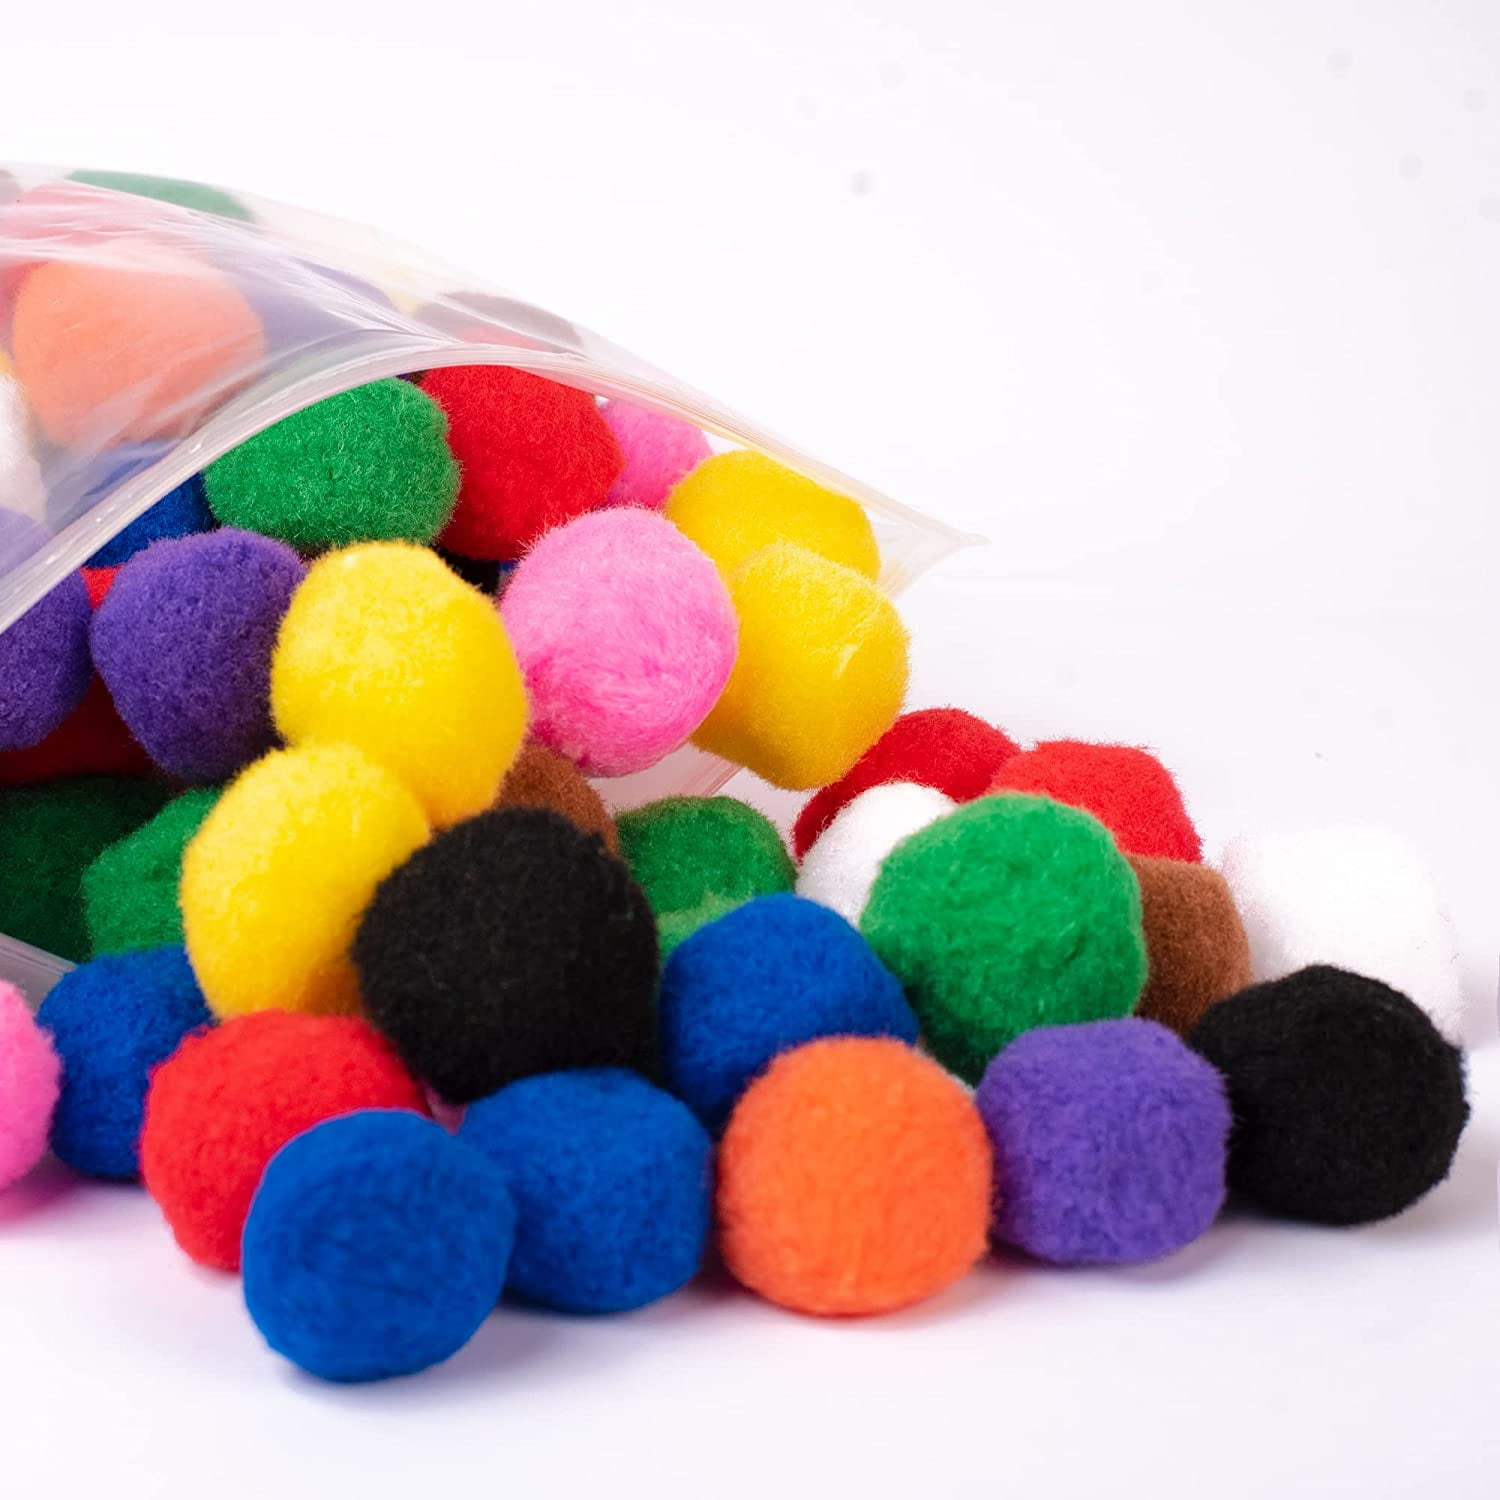 50pcs Multicolor 1.5 inch Pompoms Colorful Pom Pom Balls Fuzzy Pom Puffs for Pet